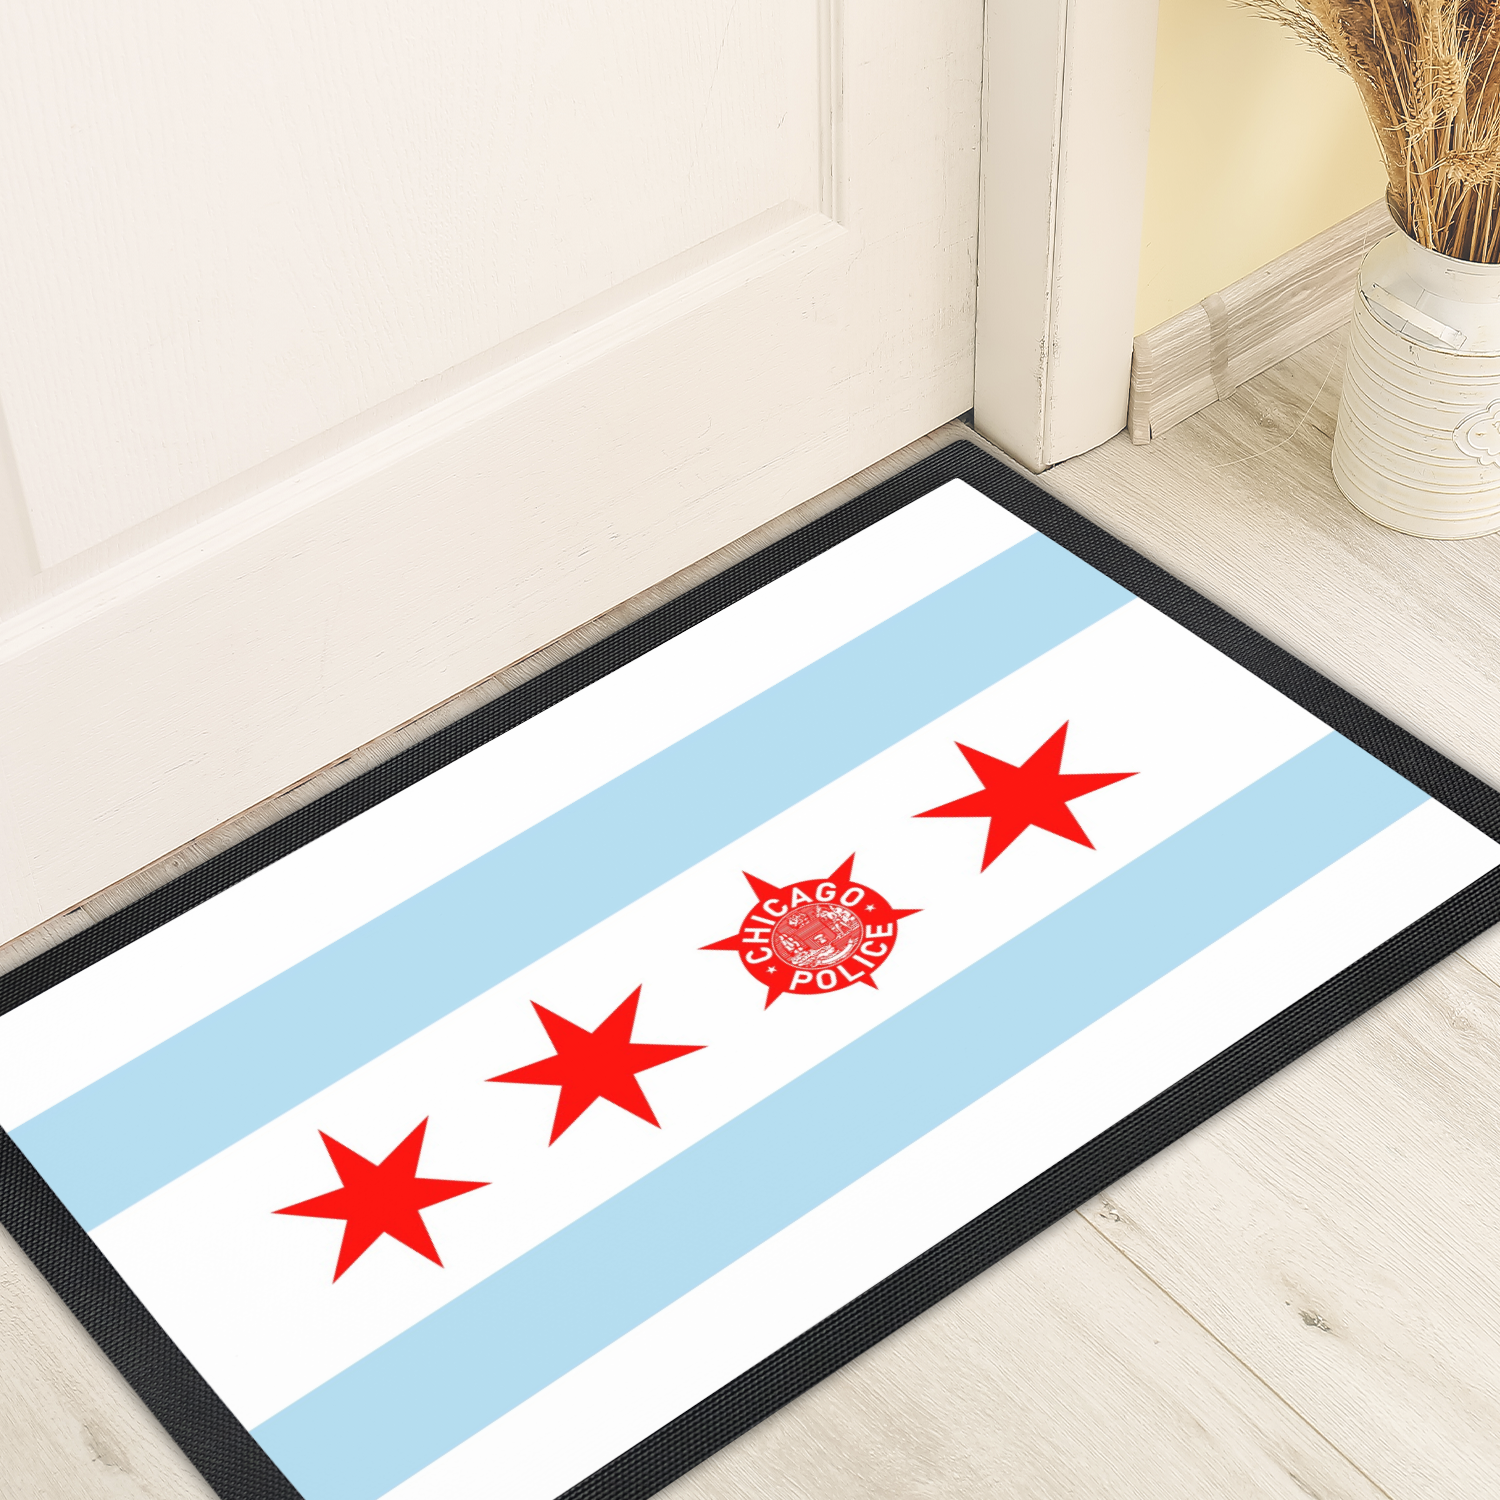 Chicago PD Flag Door Mat